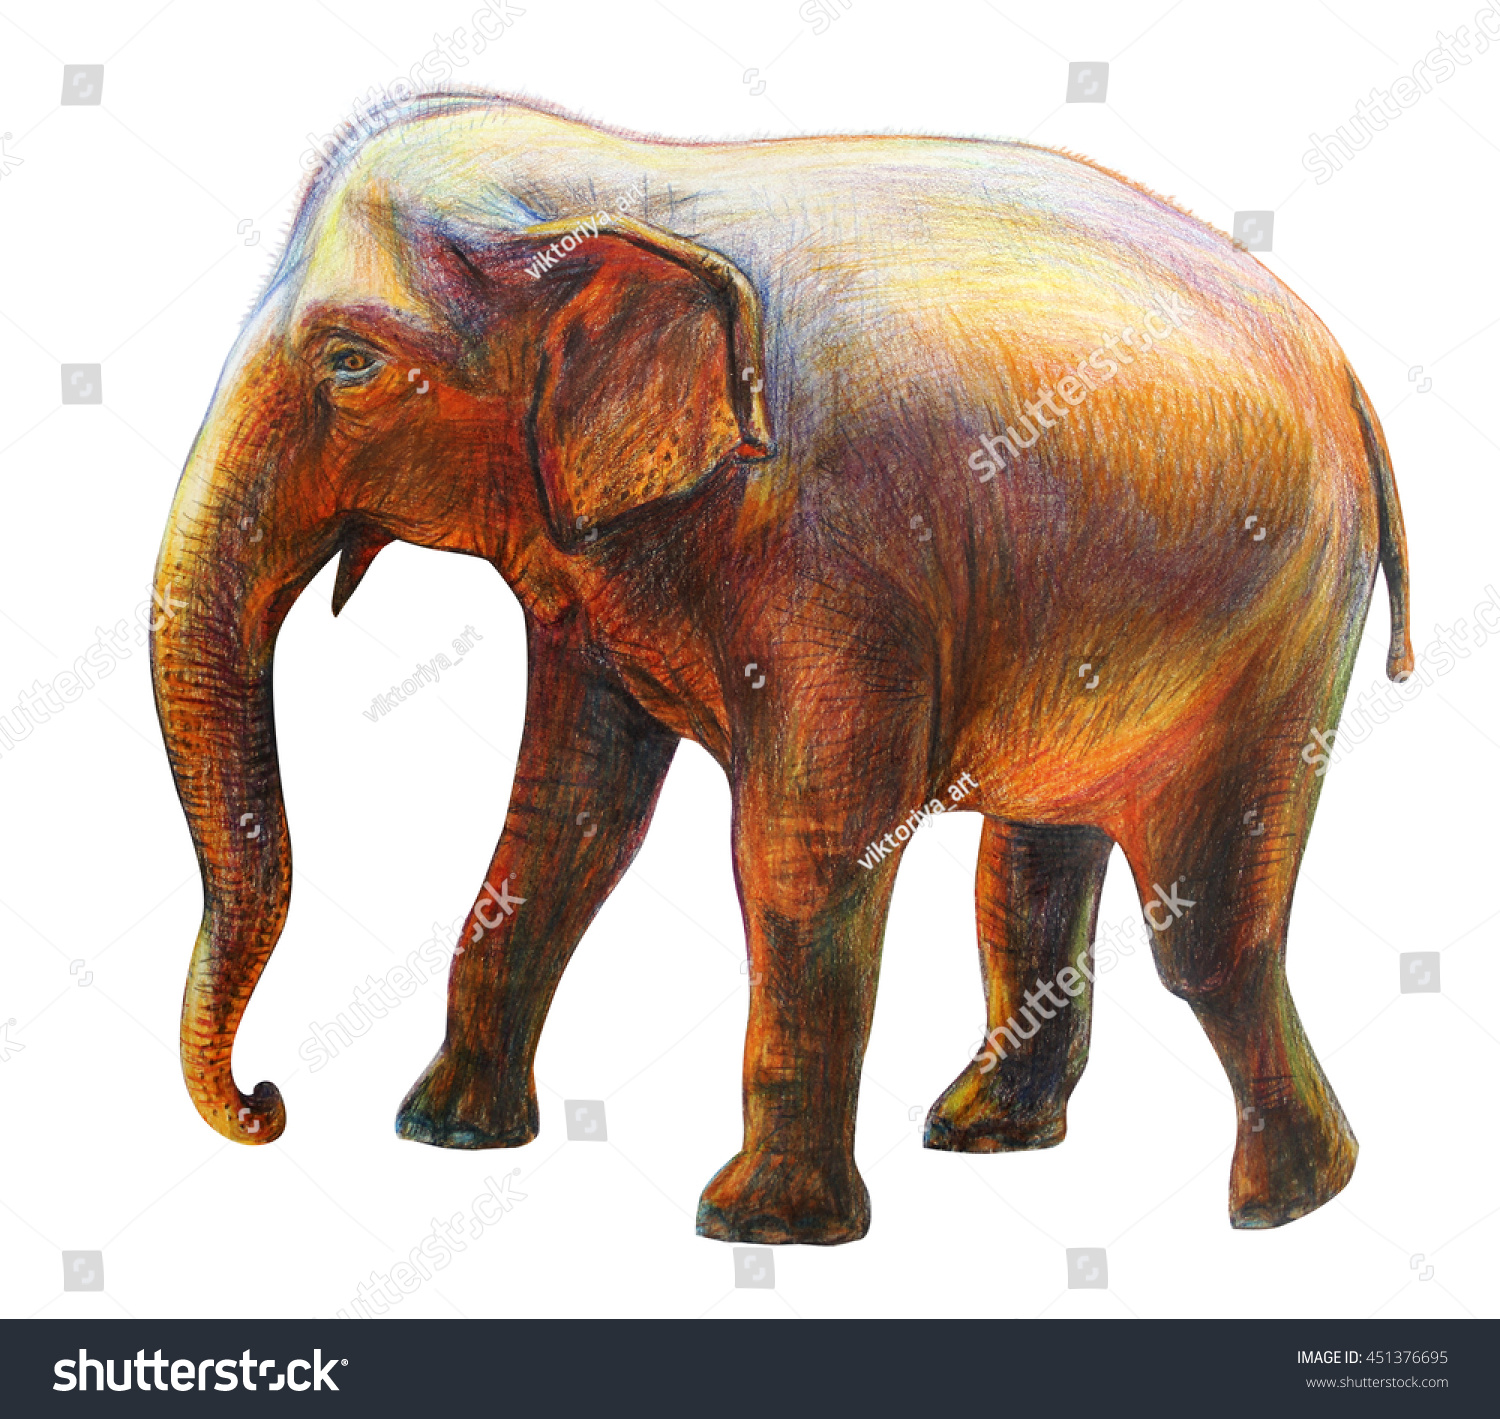 88 Colored pencil big elephant drawing Images, Stock Photos & Vectors